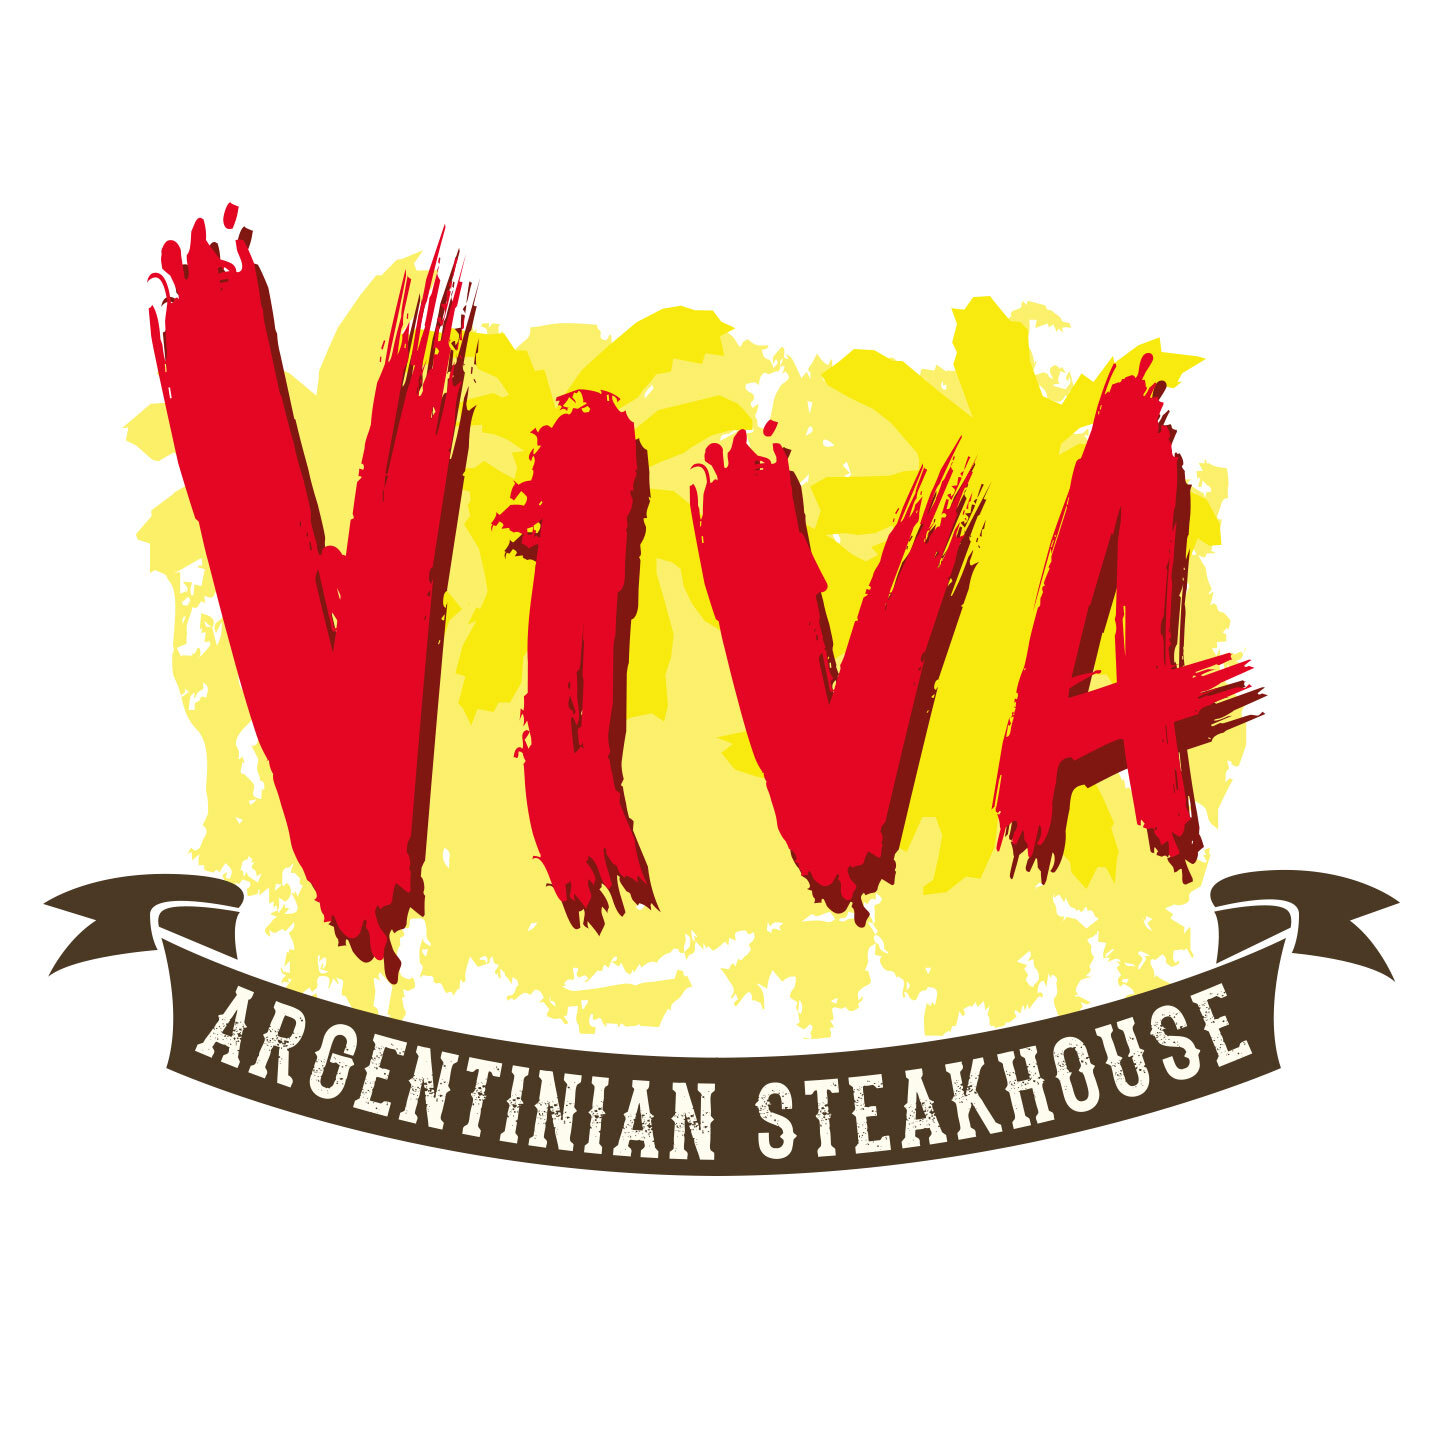 Viva-Argentinian-Steakhouse-Key-West-Florida.jpg